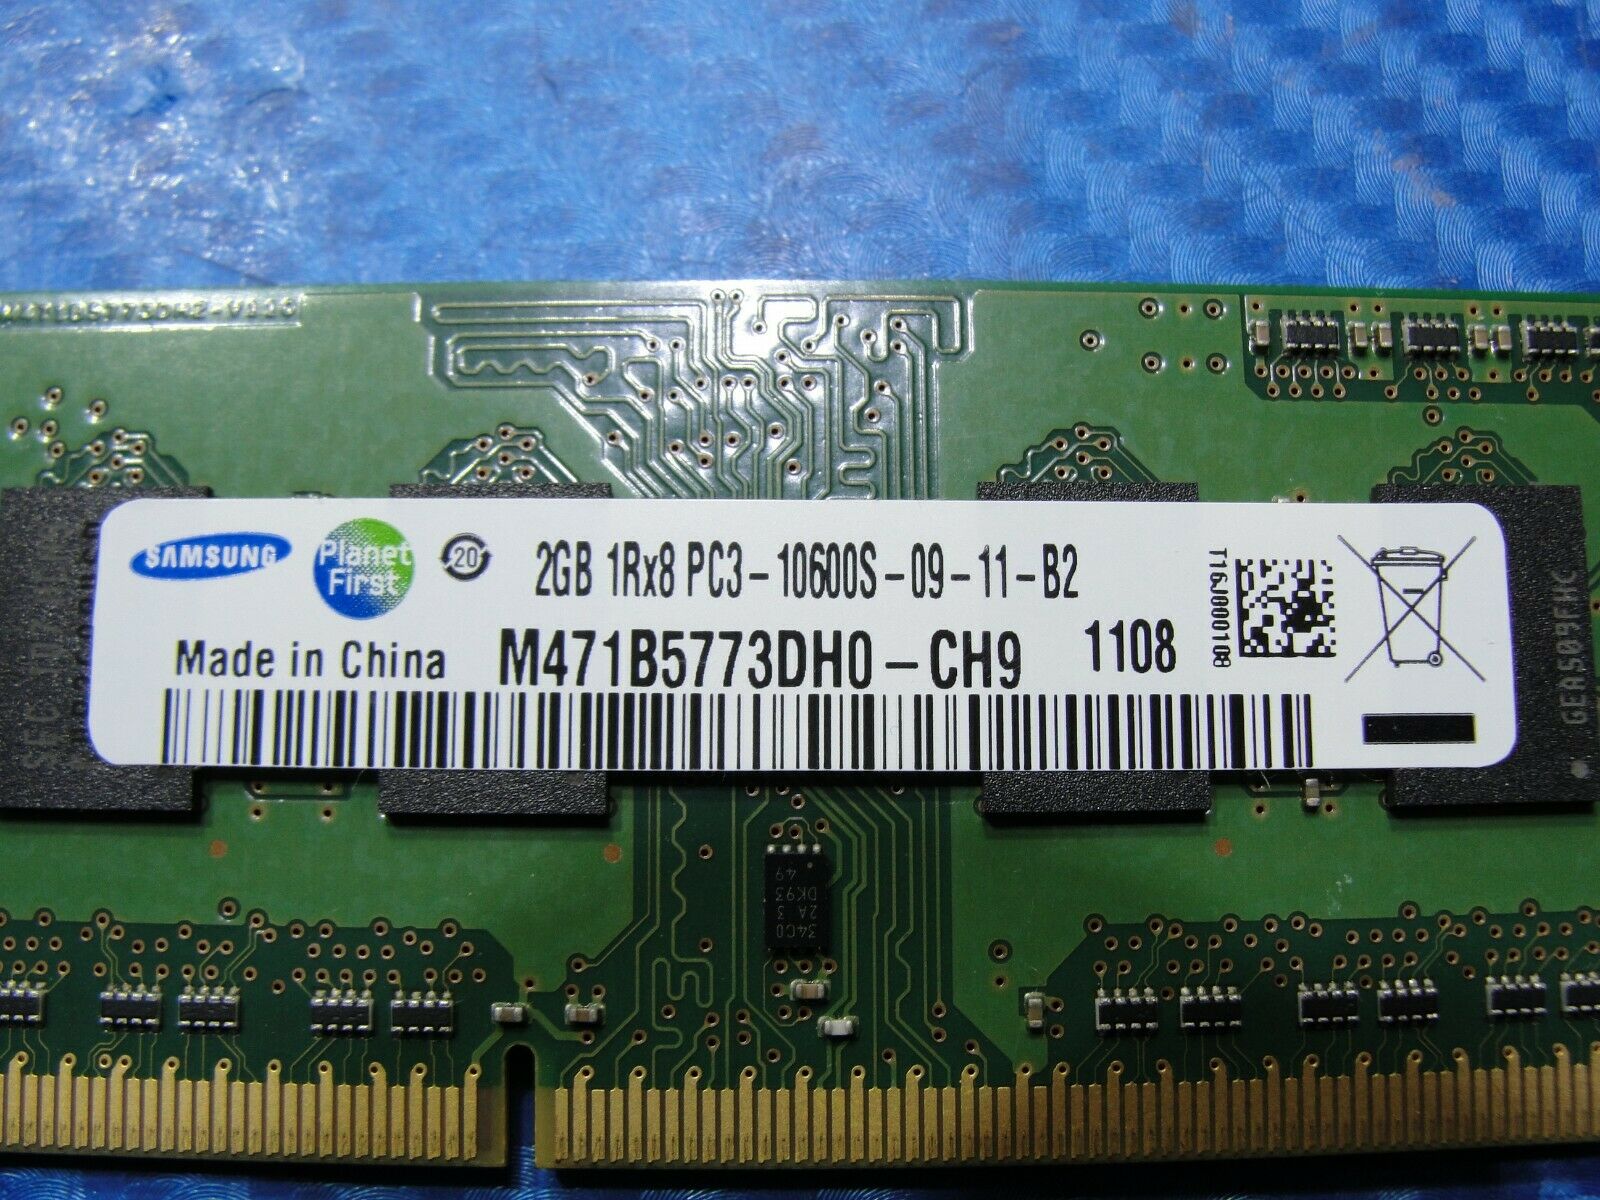 MacBook A1278 Laptop Samsung 2GB Memory PC3-10600S-09-11-B2 M471B5773DH0-CH9 #1 Samsung